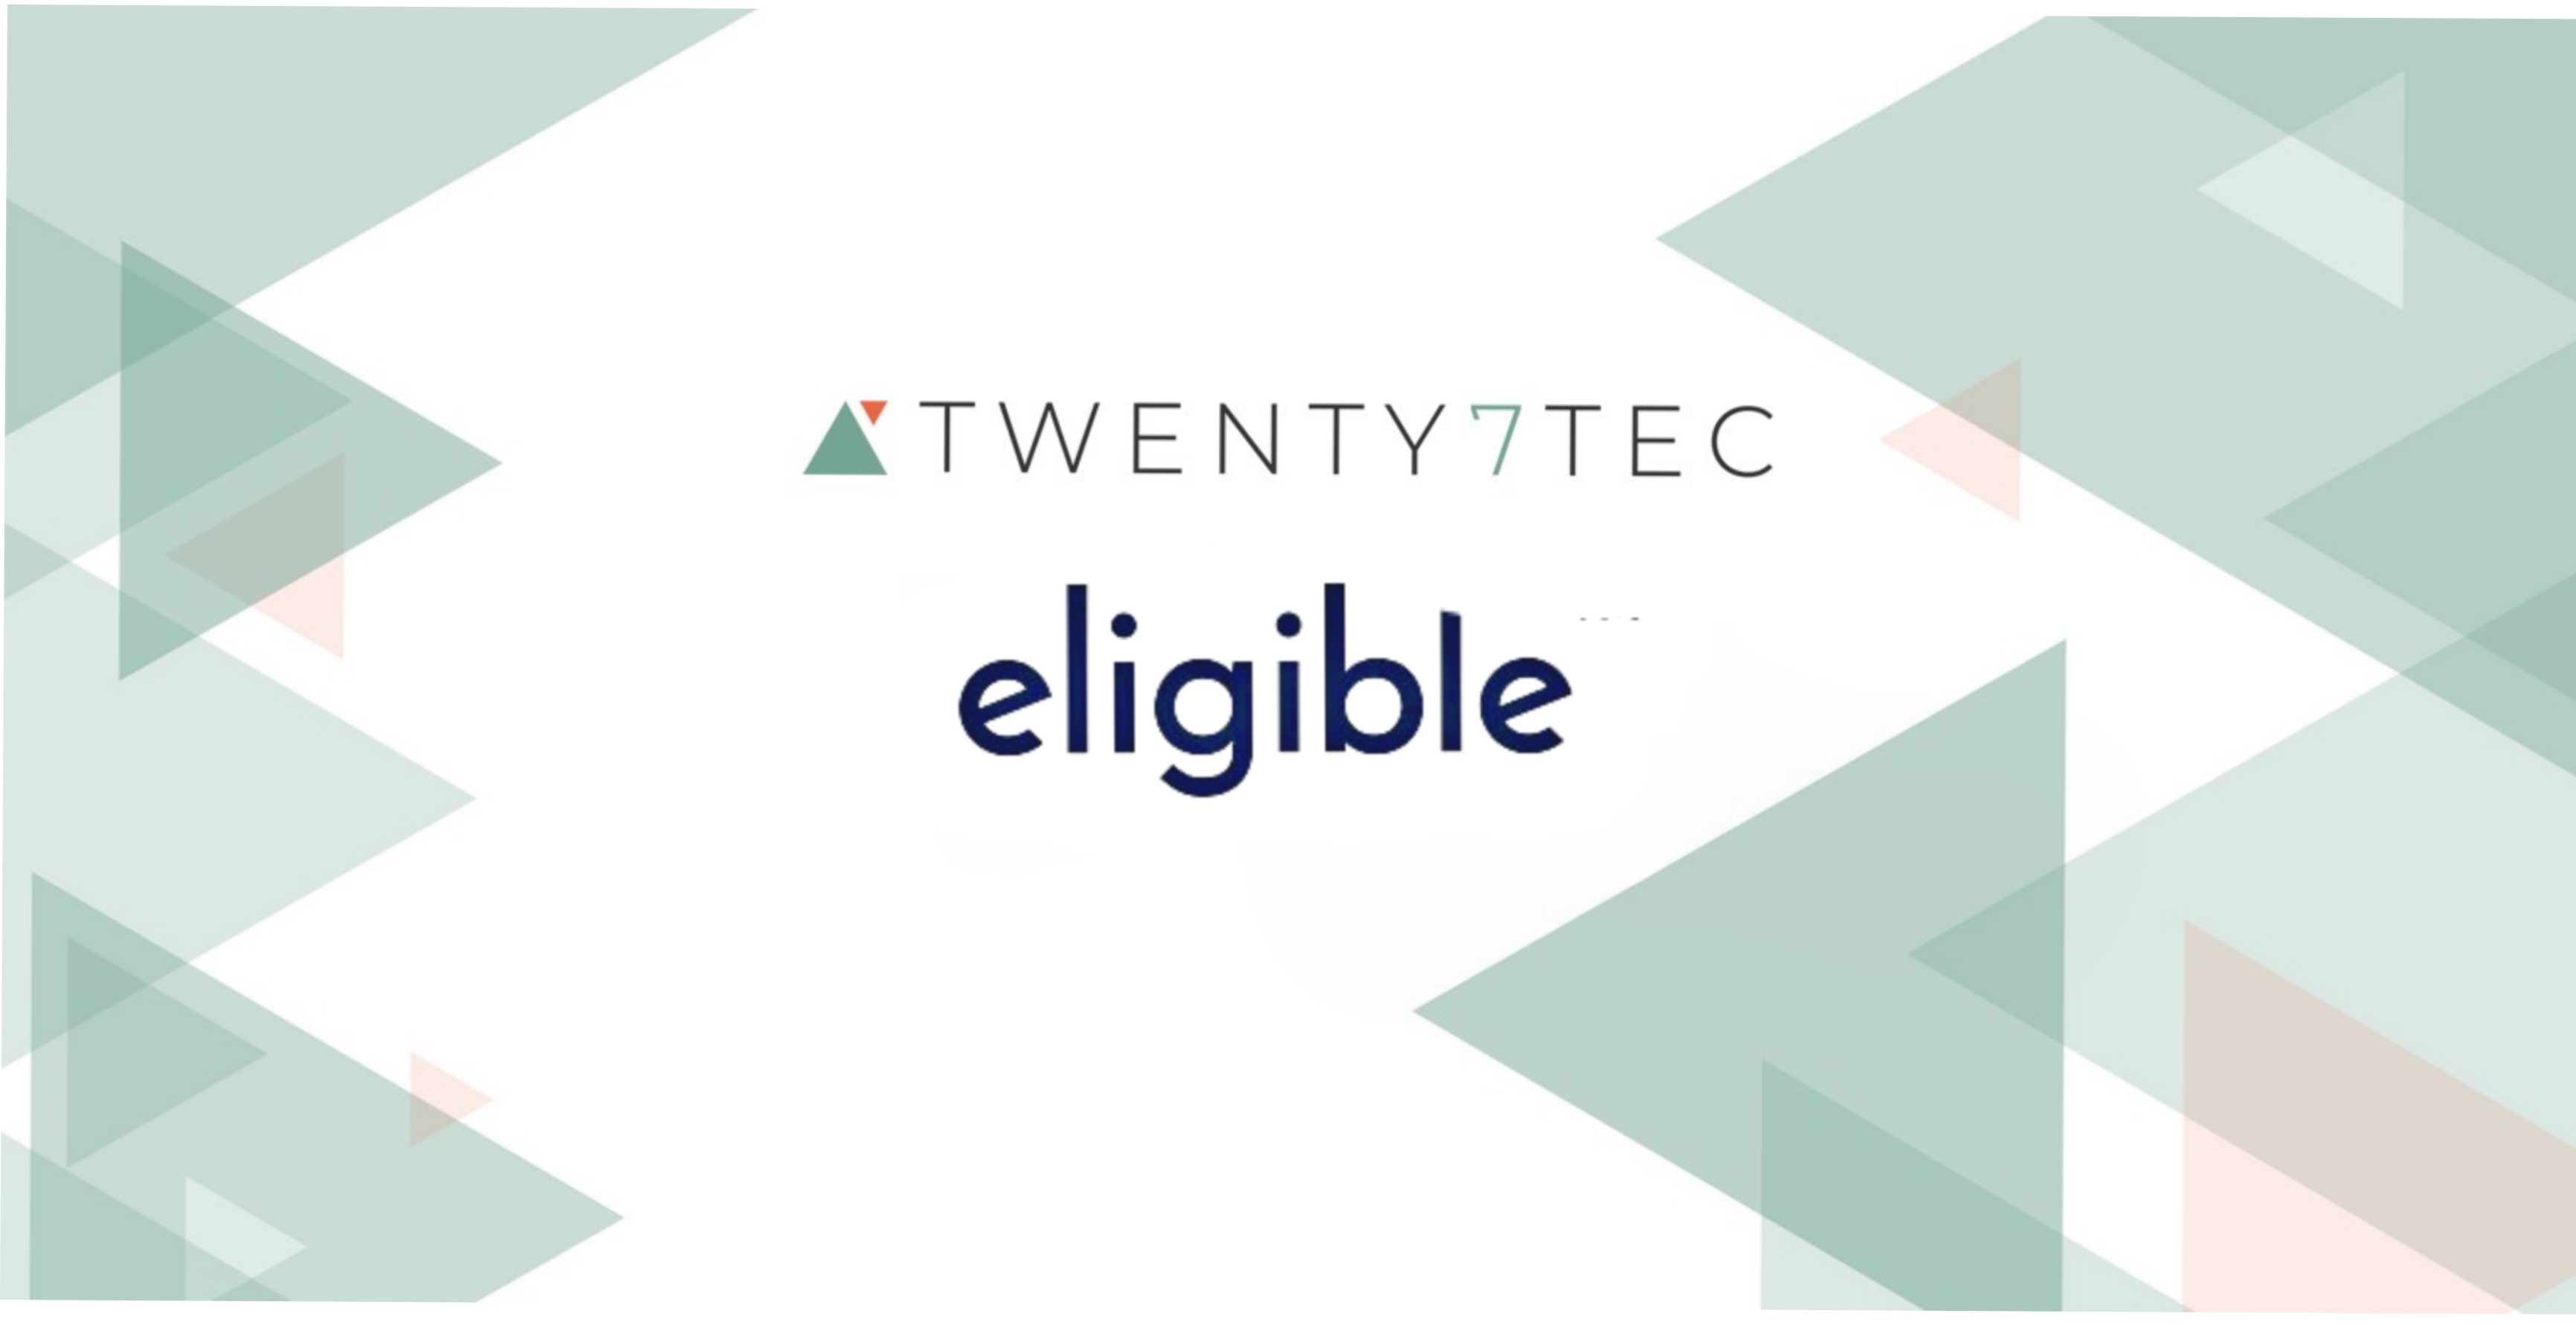 Twenty7Tec and Eligible ai Announce Partnership to help advisers Retain Clients